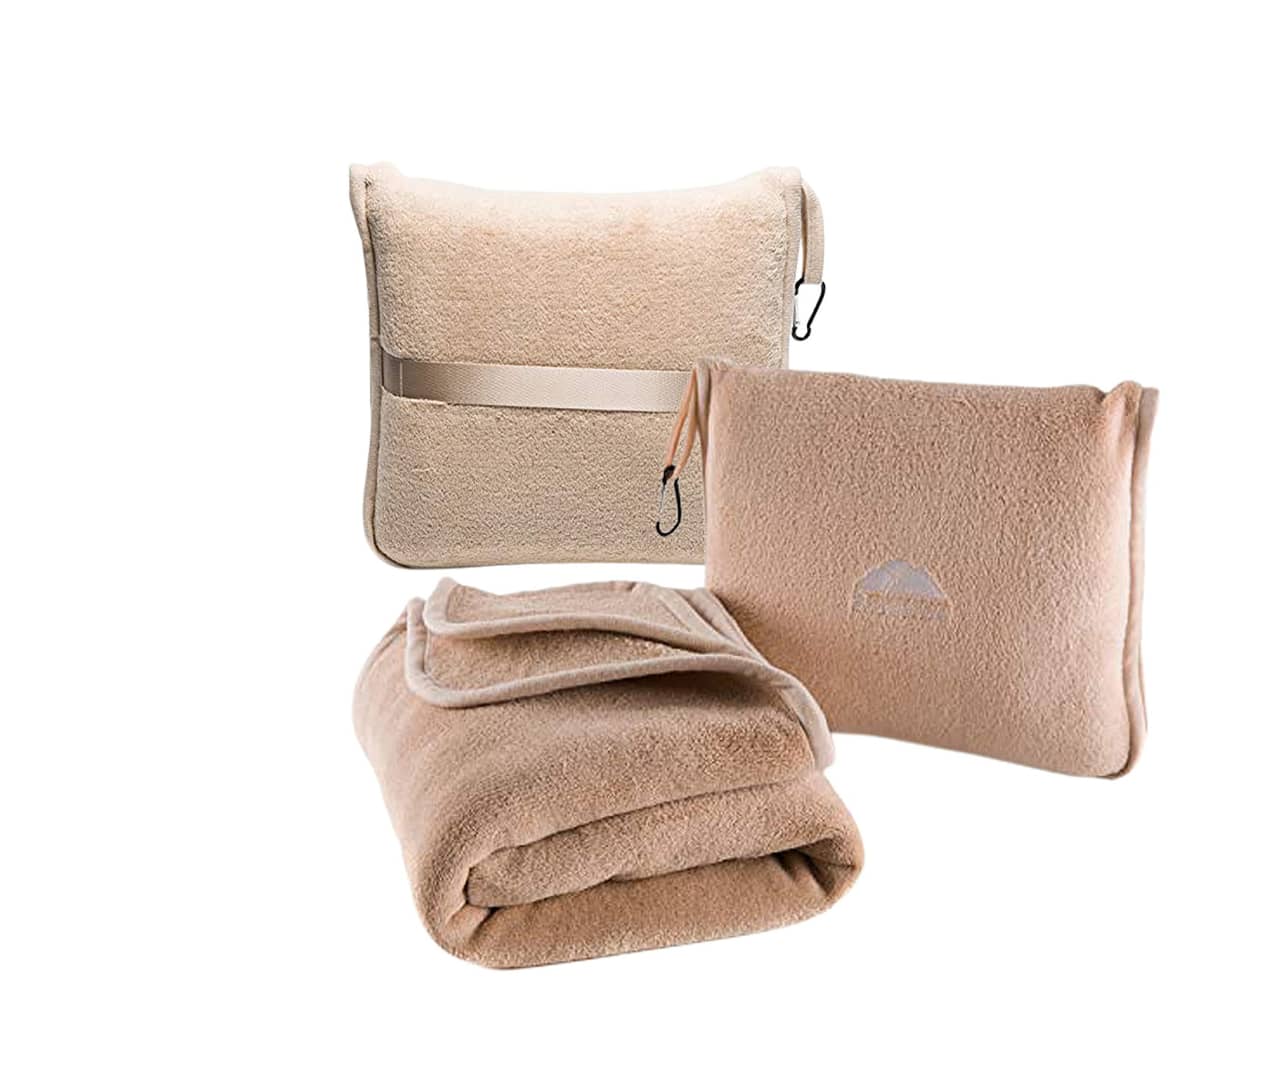 Travelrest All-in-One Premium Travel Pillow - Grey - Travel Pillows & Blankets